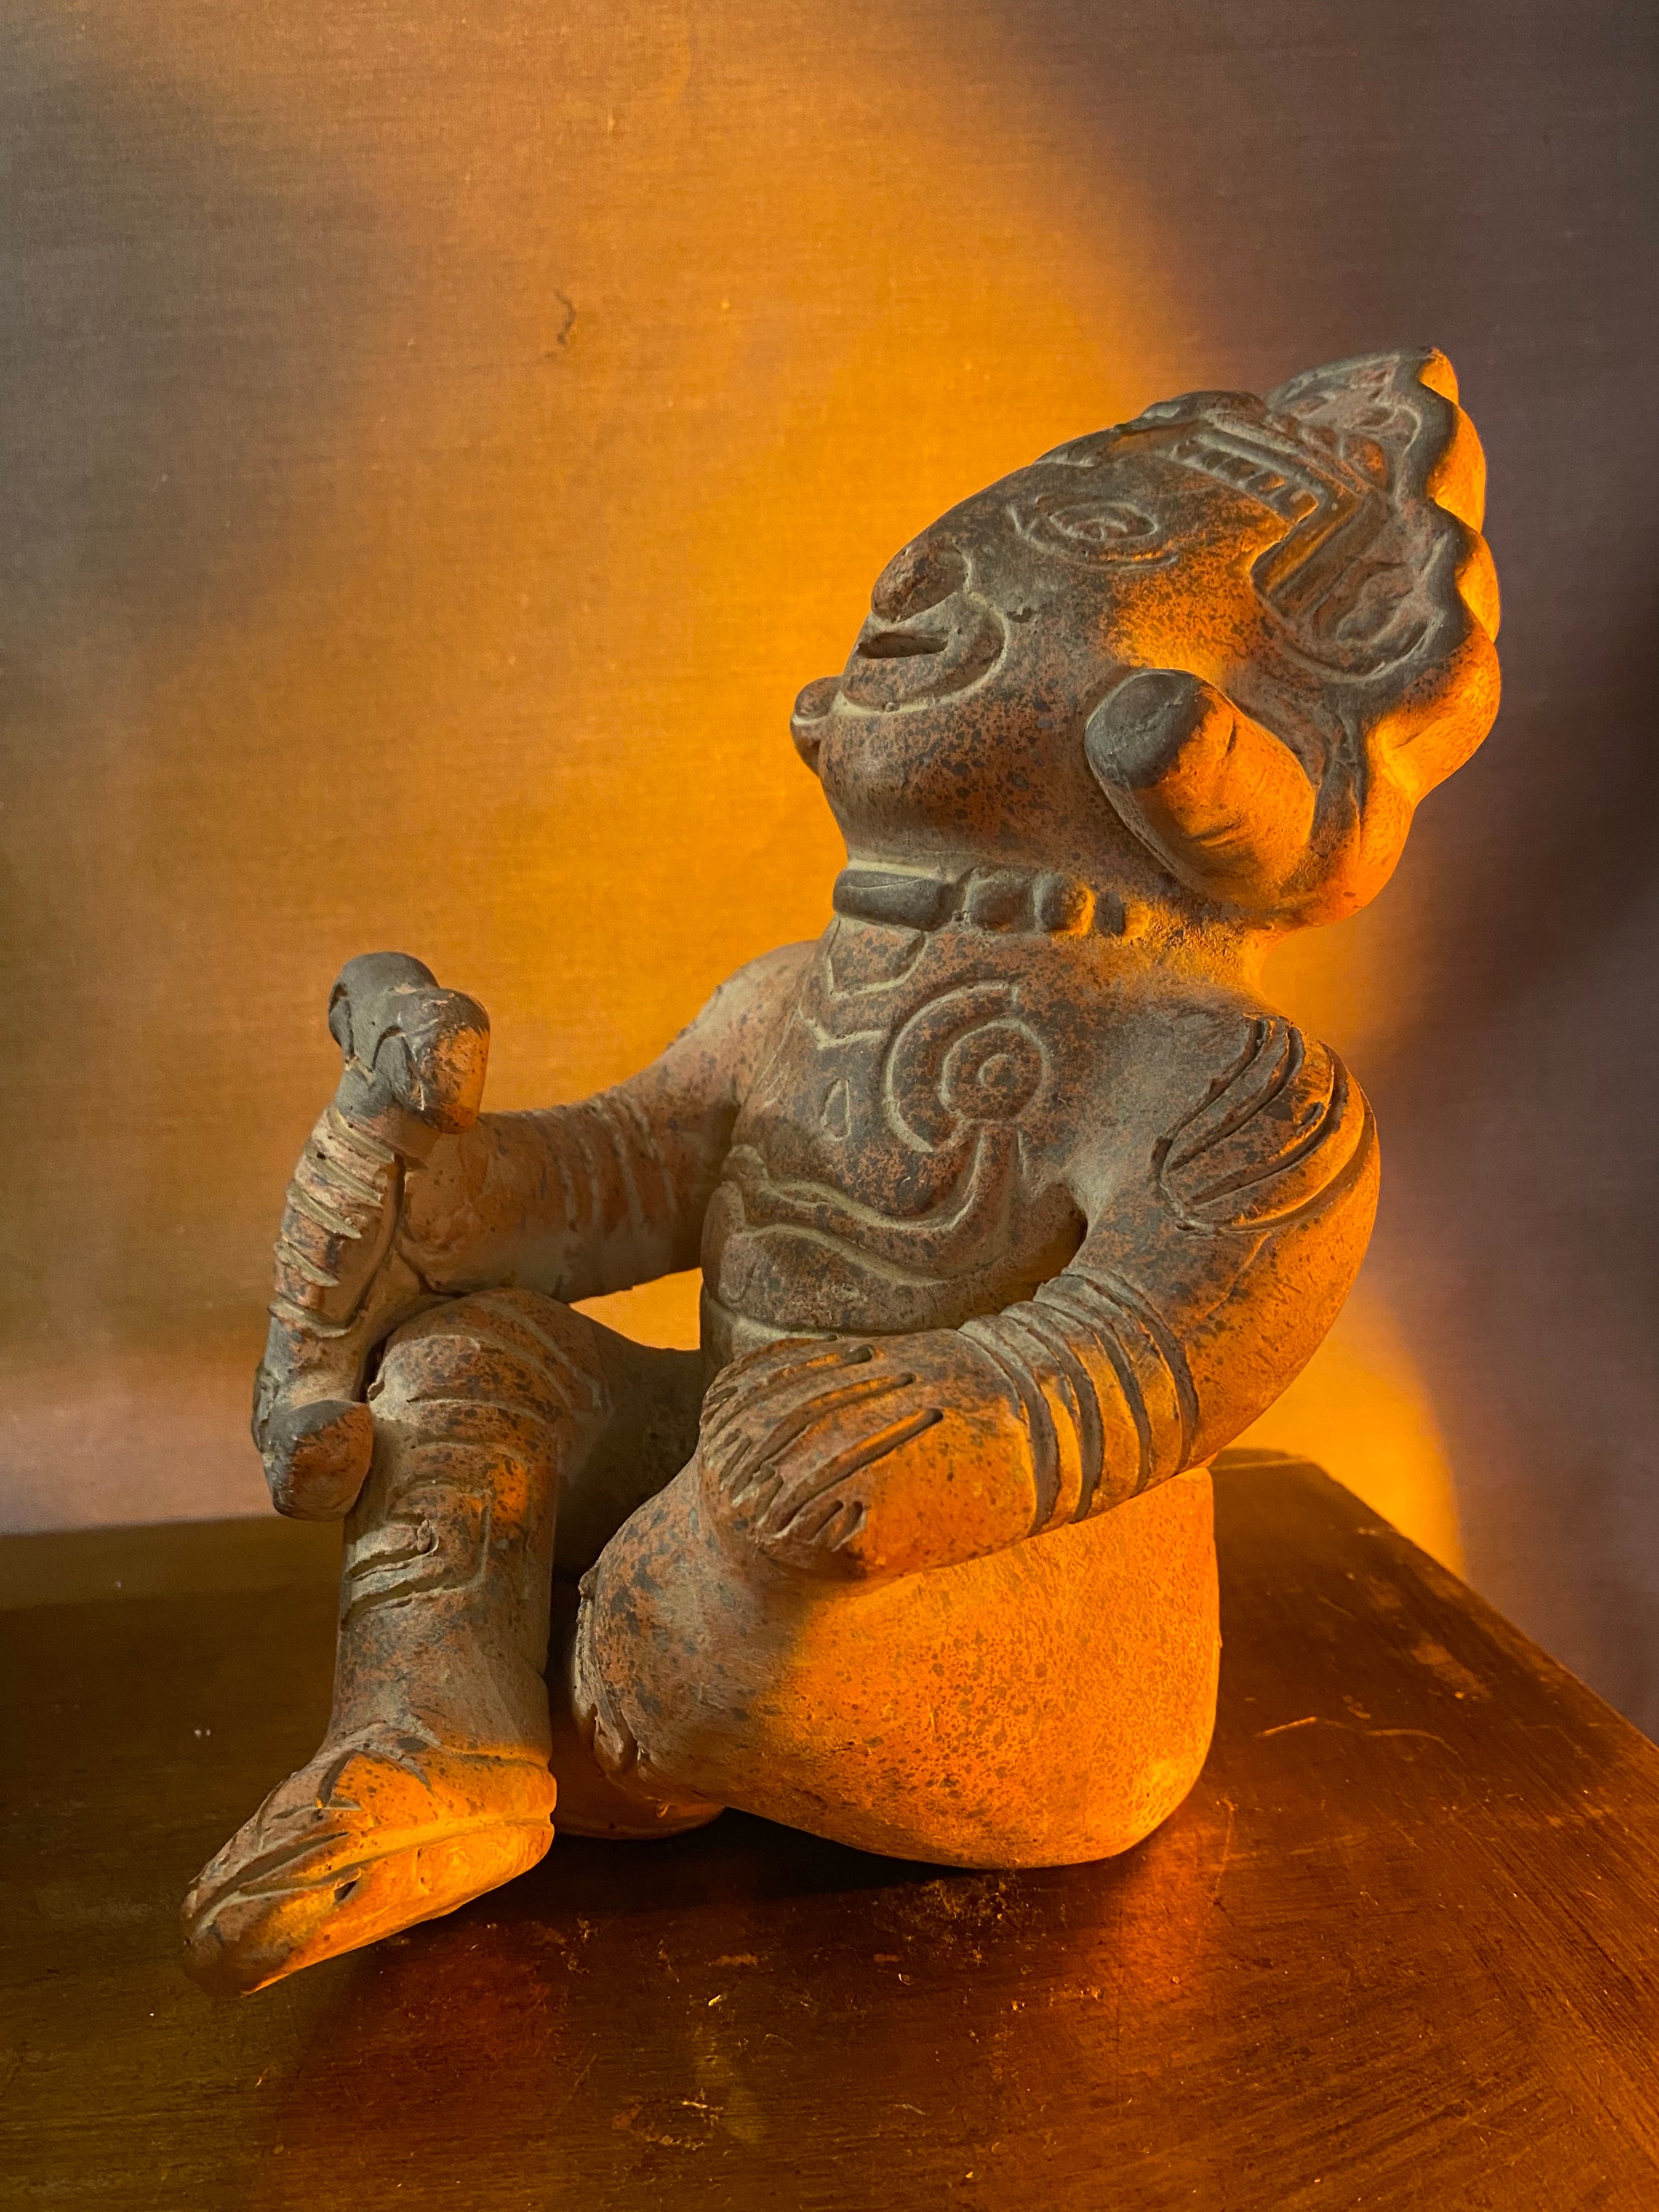 Vintage Small Cross-Legged Pre-Columbian Style Terra Cotta Statue of Mesoamerican God Xochipilli or "Prince of Flowers"